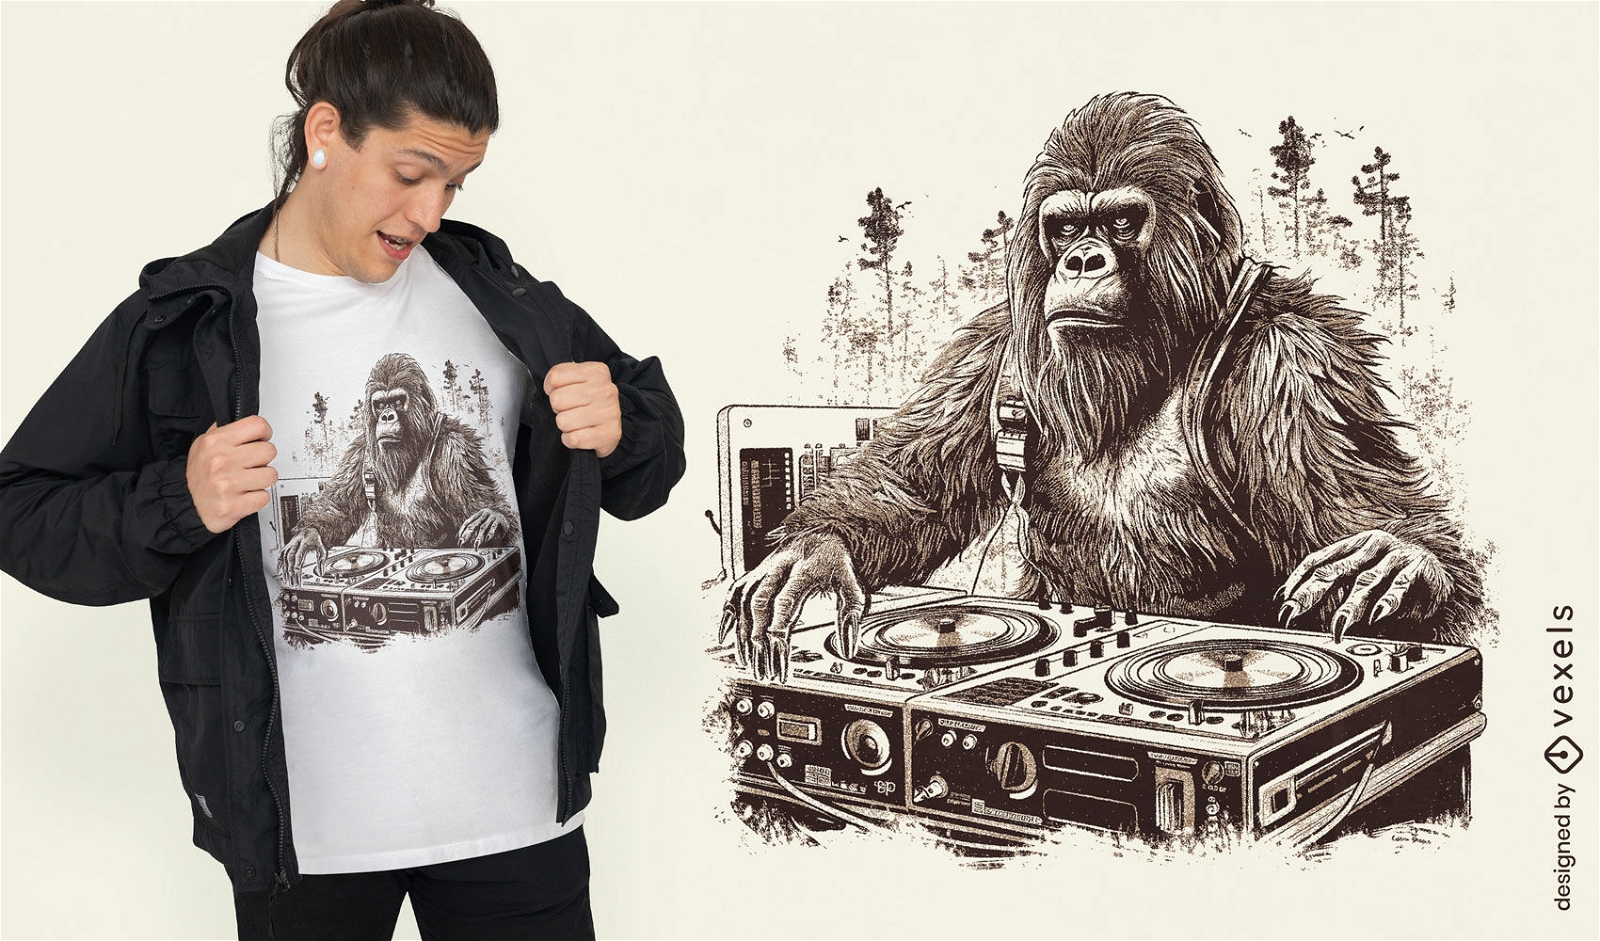 Dise?o realista de camiseta de DJ de pie grande.